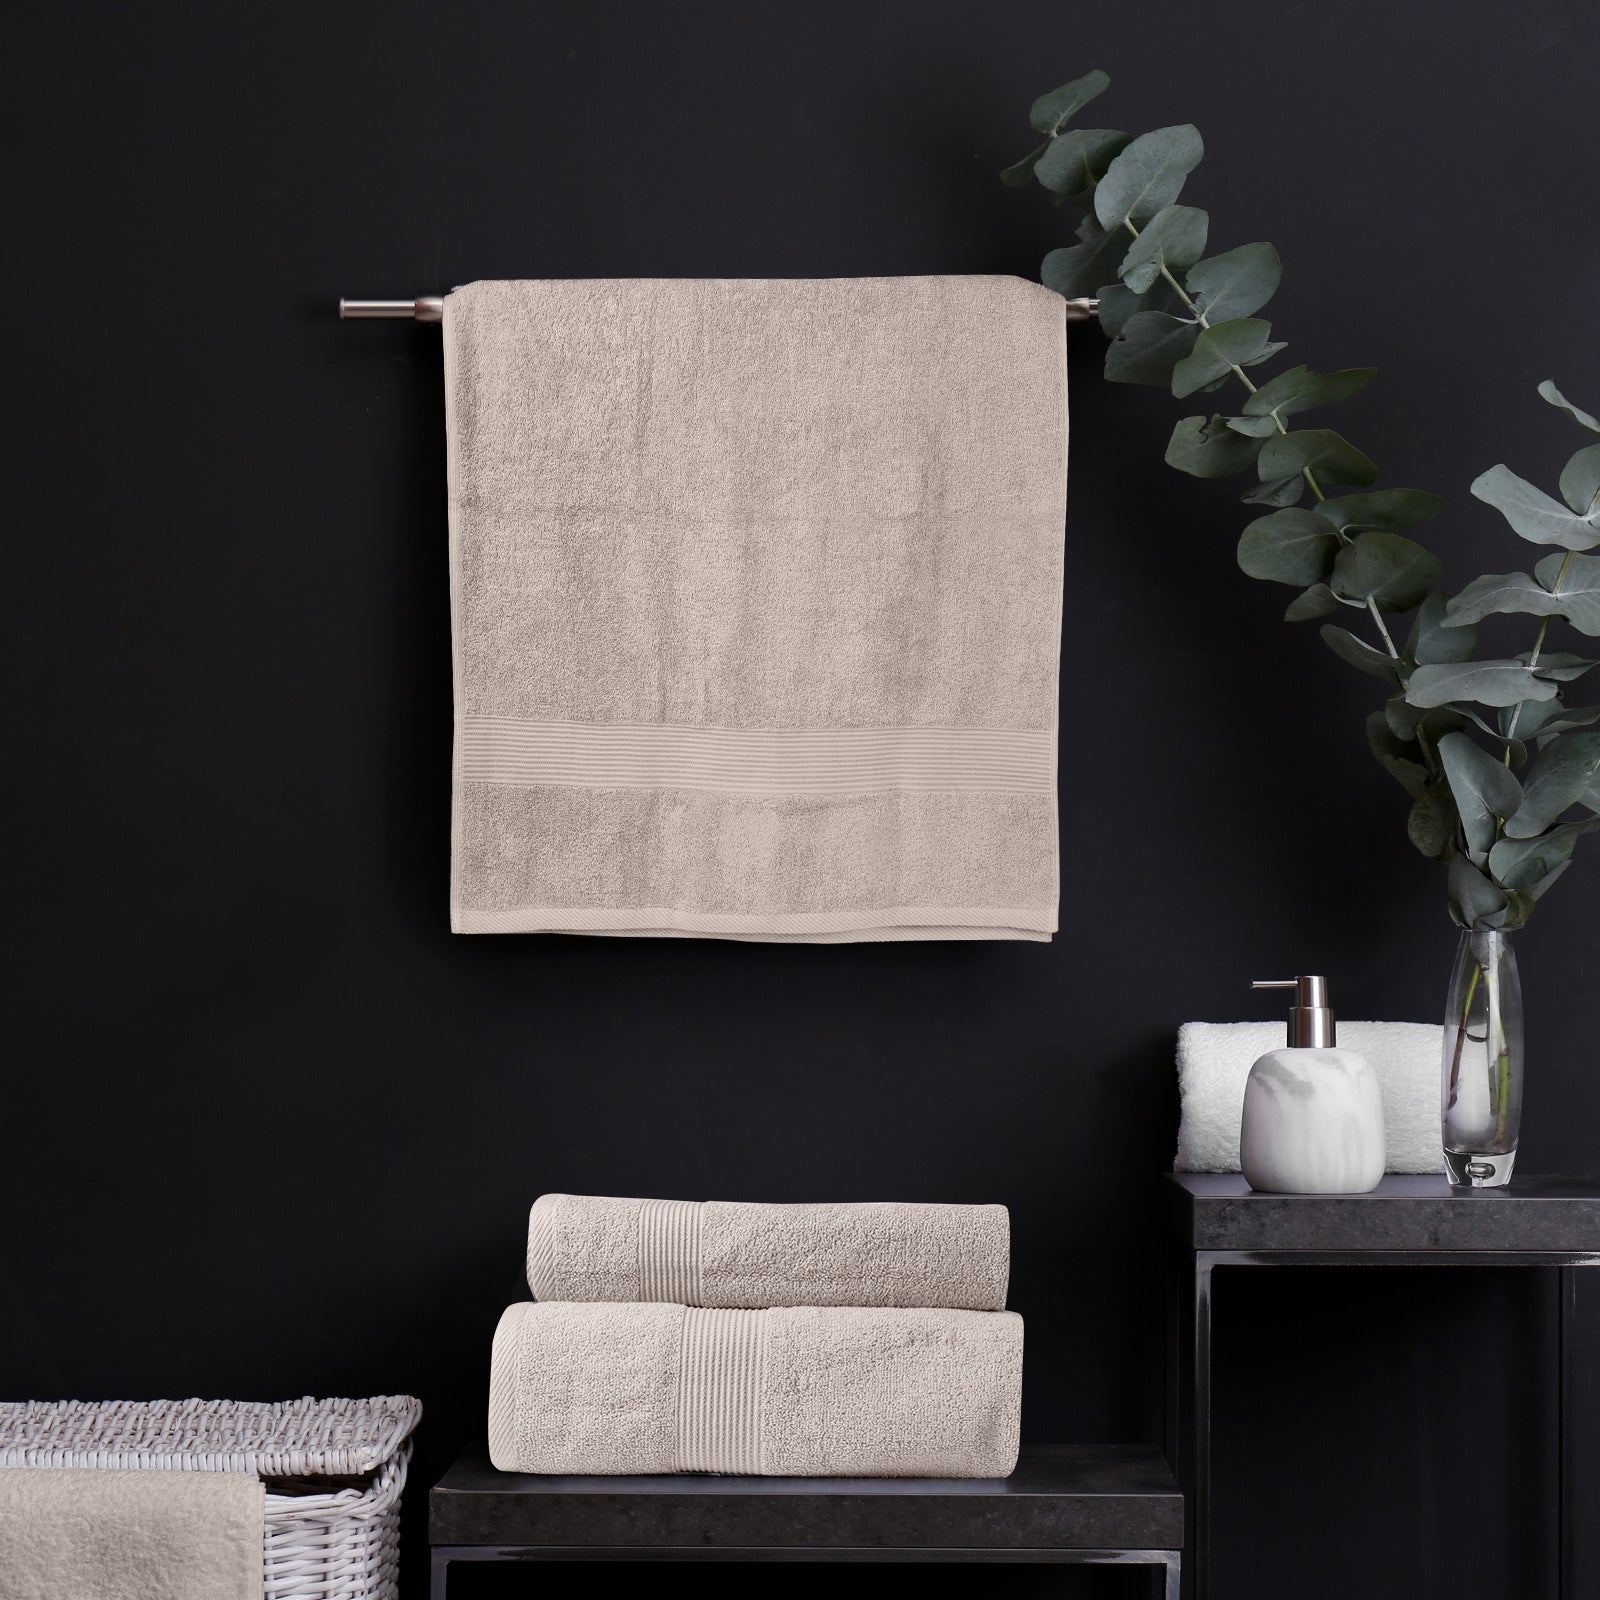 Royal Comfort 4 Piece Cotton Bamboo Towel Set 450GSM Luxurious Absorbent Plush - Beige - SILBERSHELL